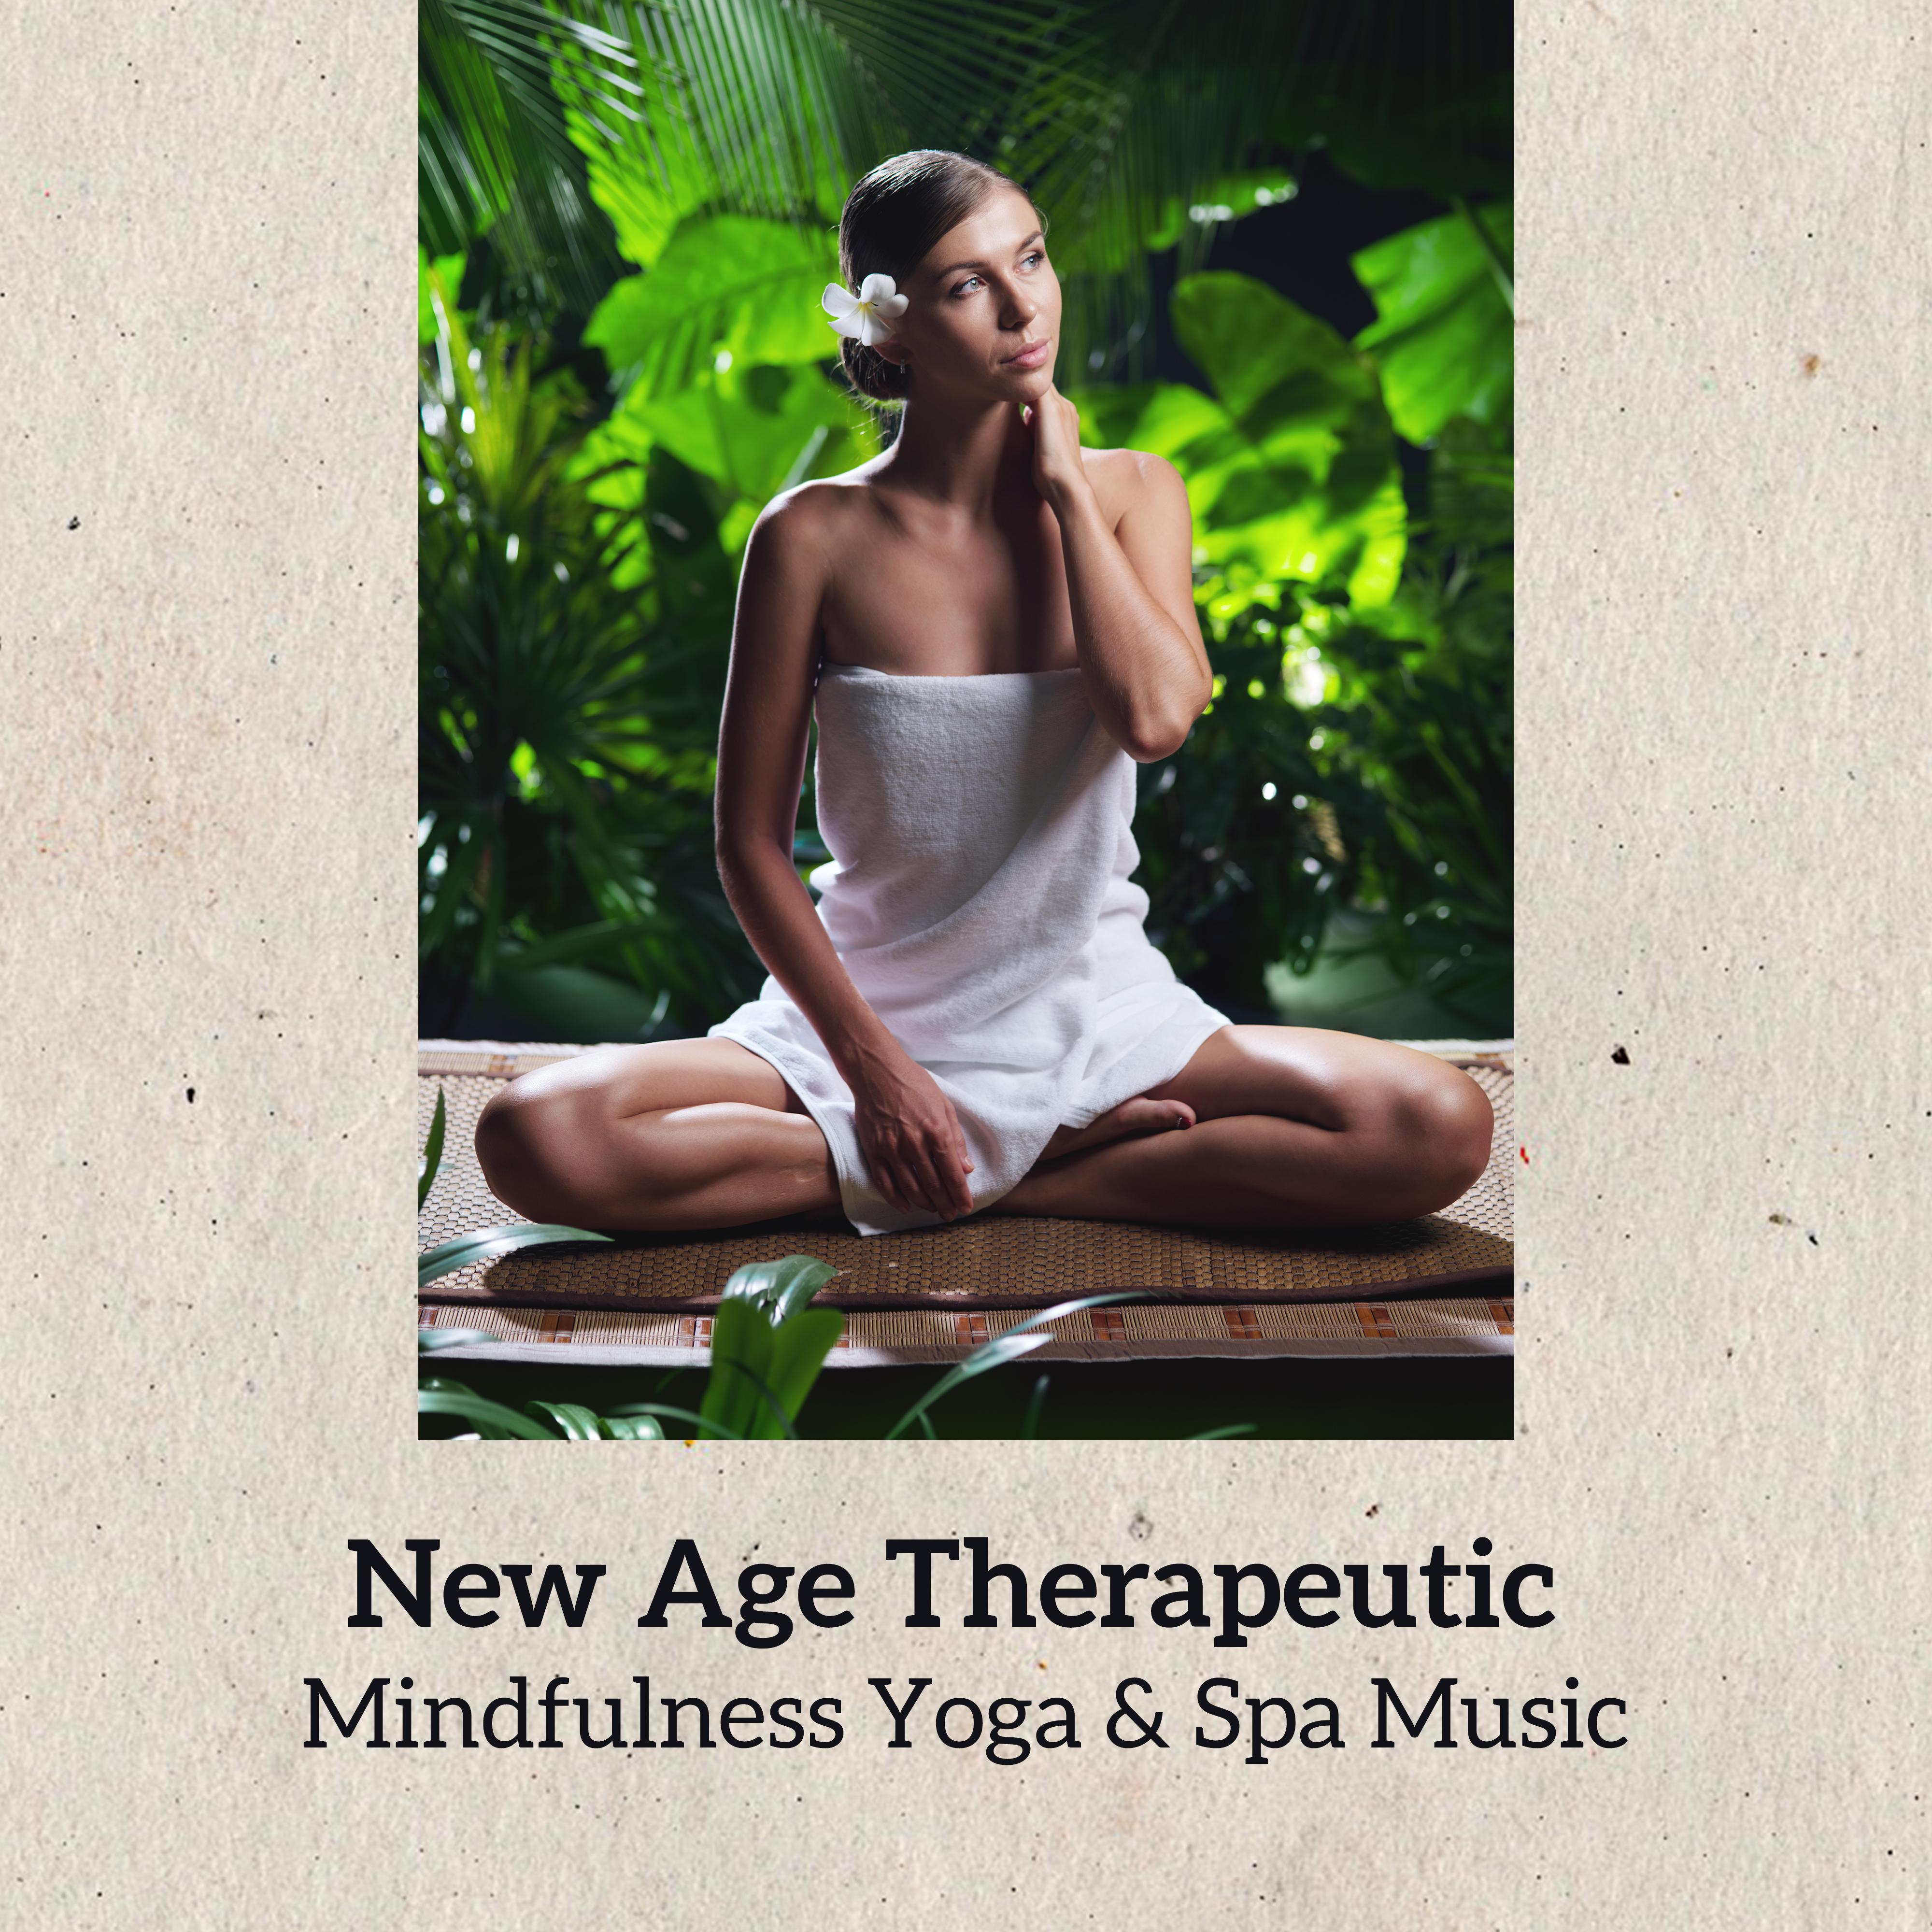 New Age Therapeutic Mindfulness Yoga & Spa Music